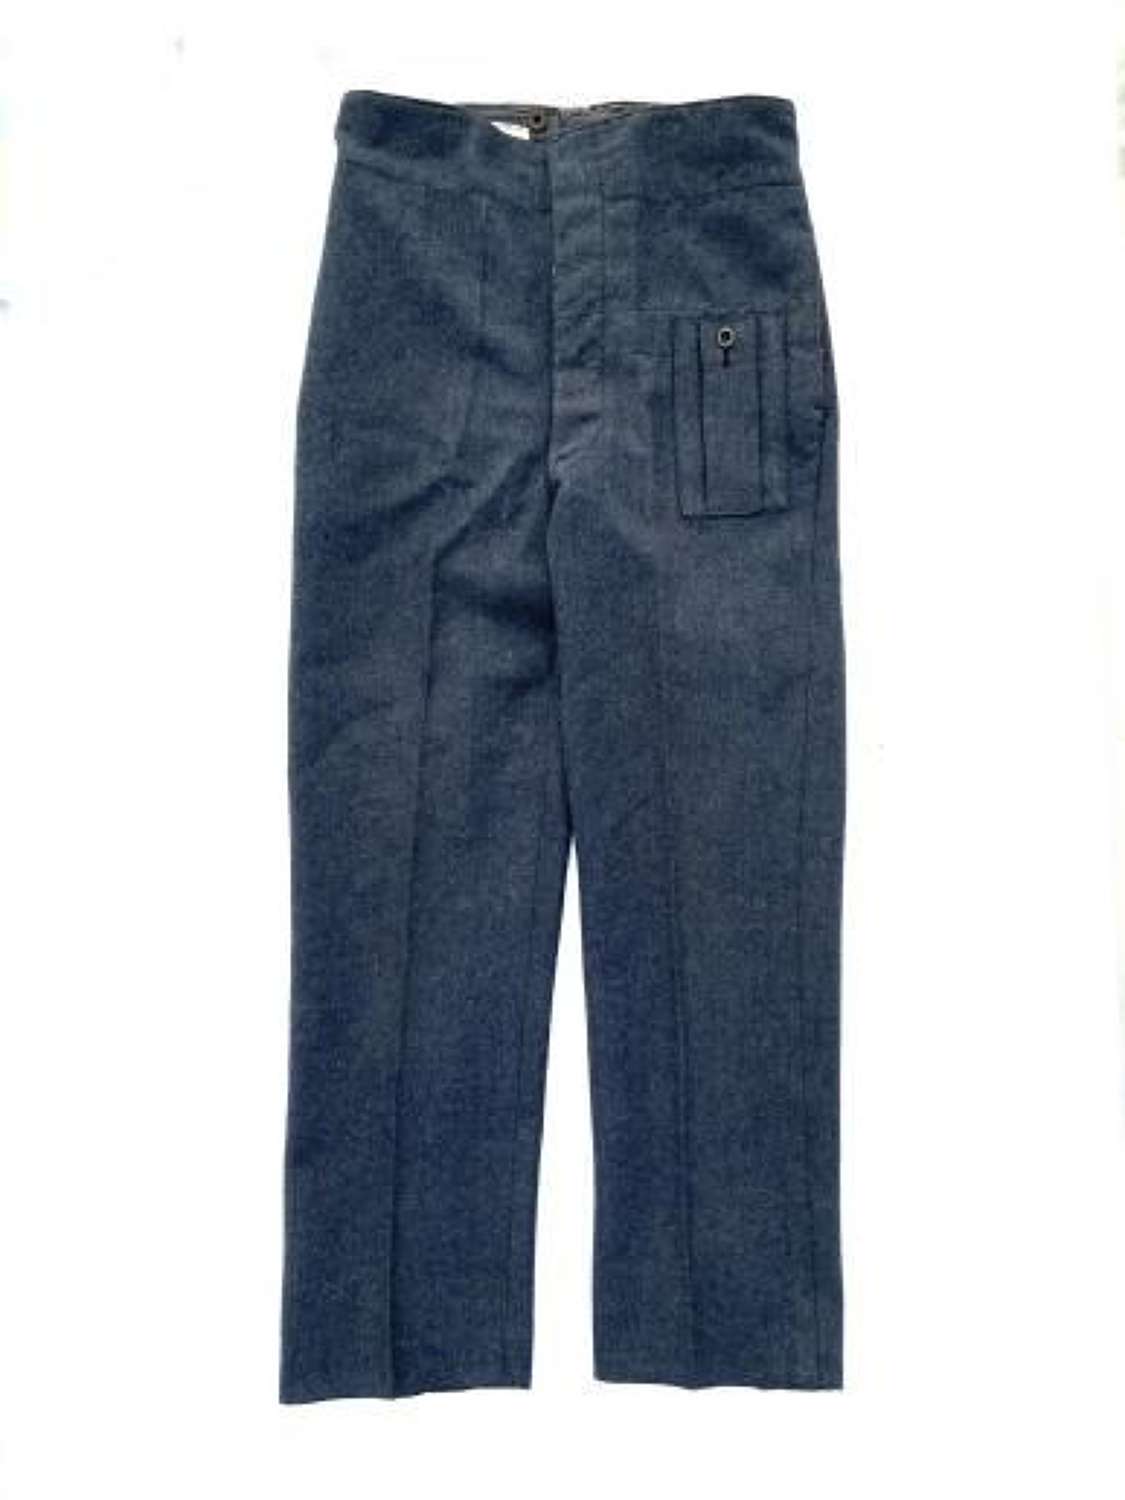 Original WW2 RAF War Service Dress Trousers - Size 16